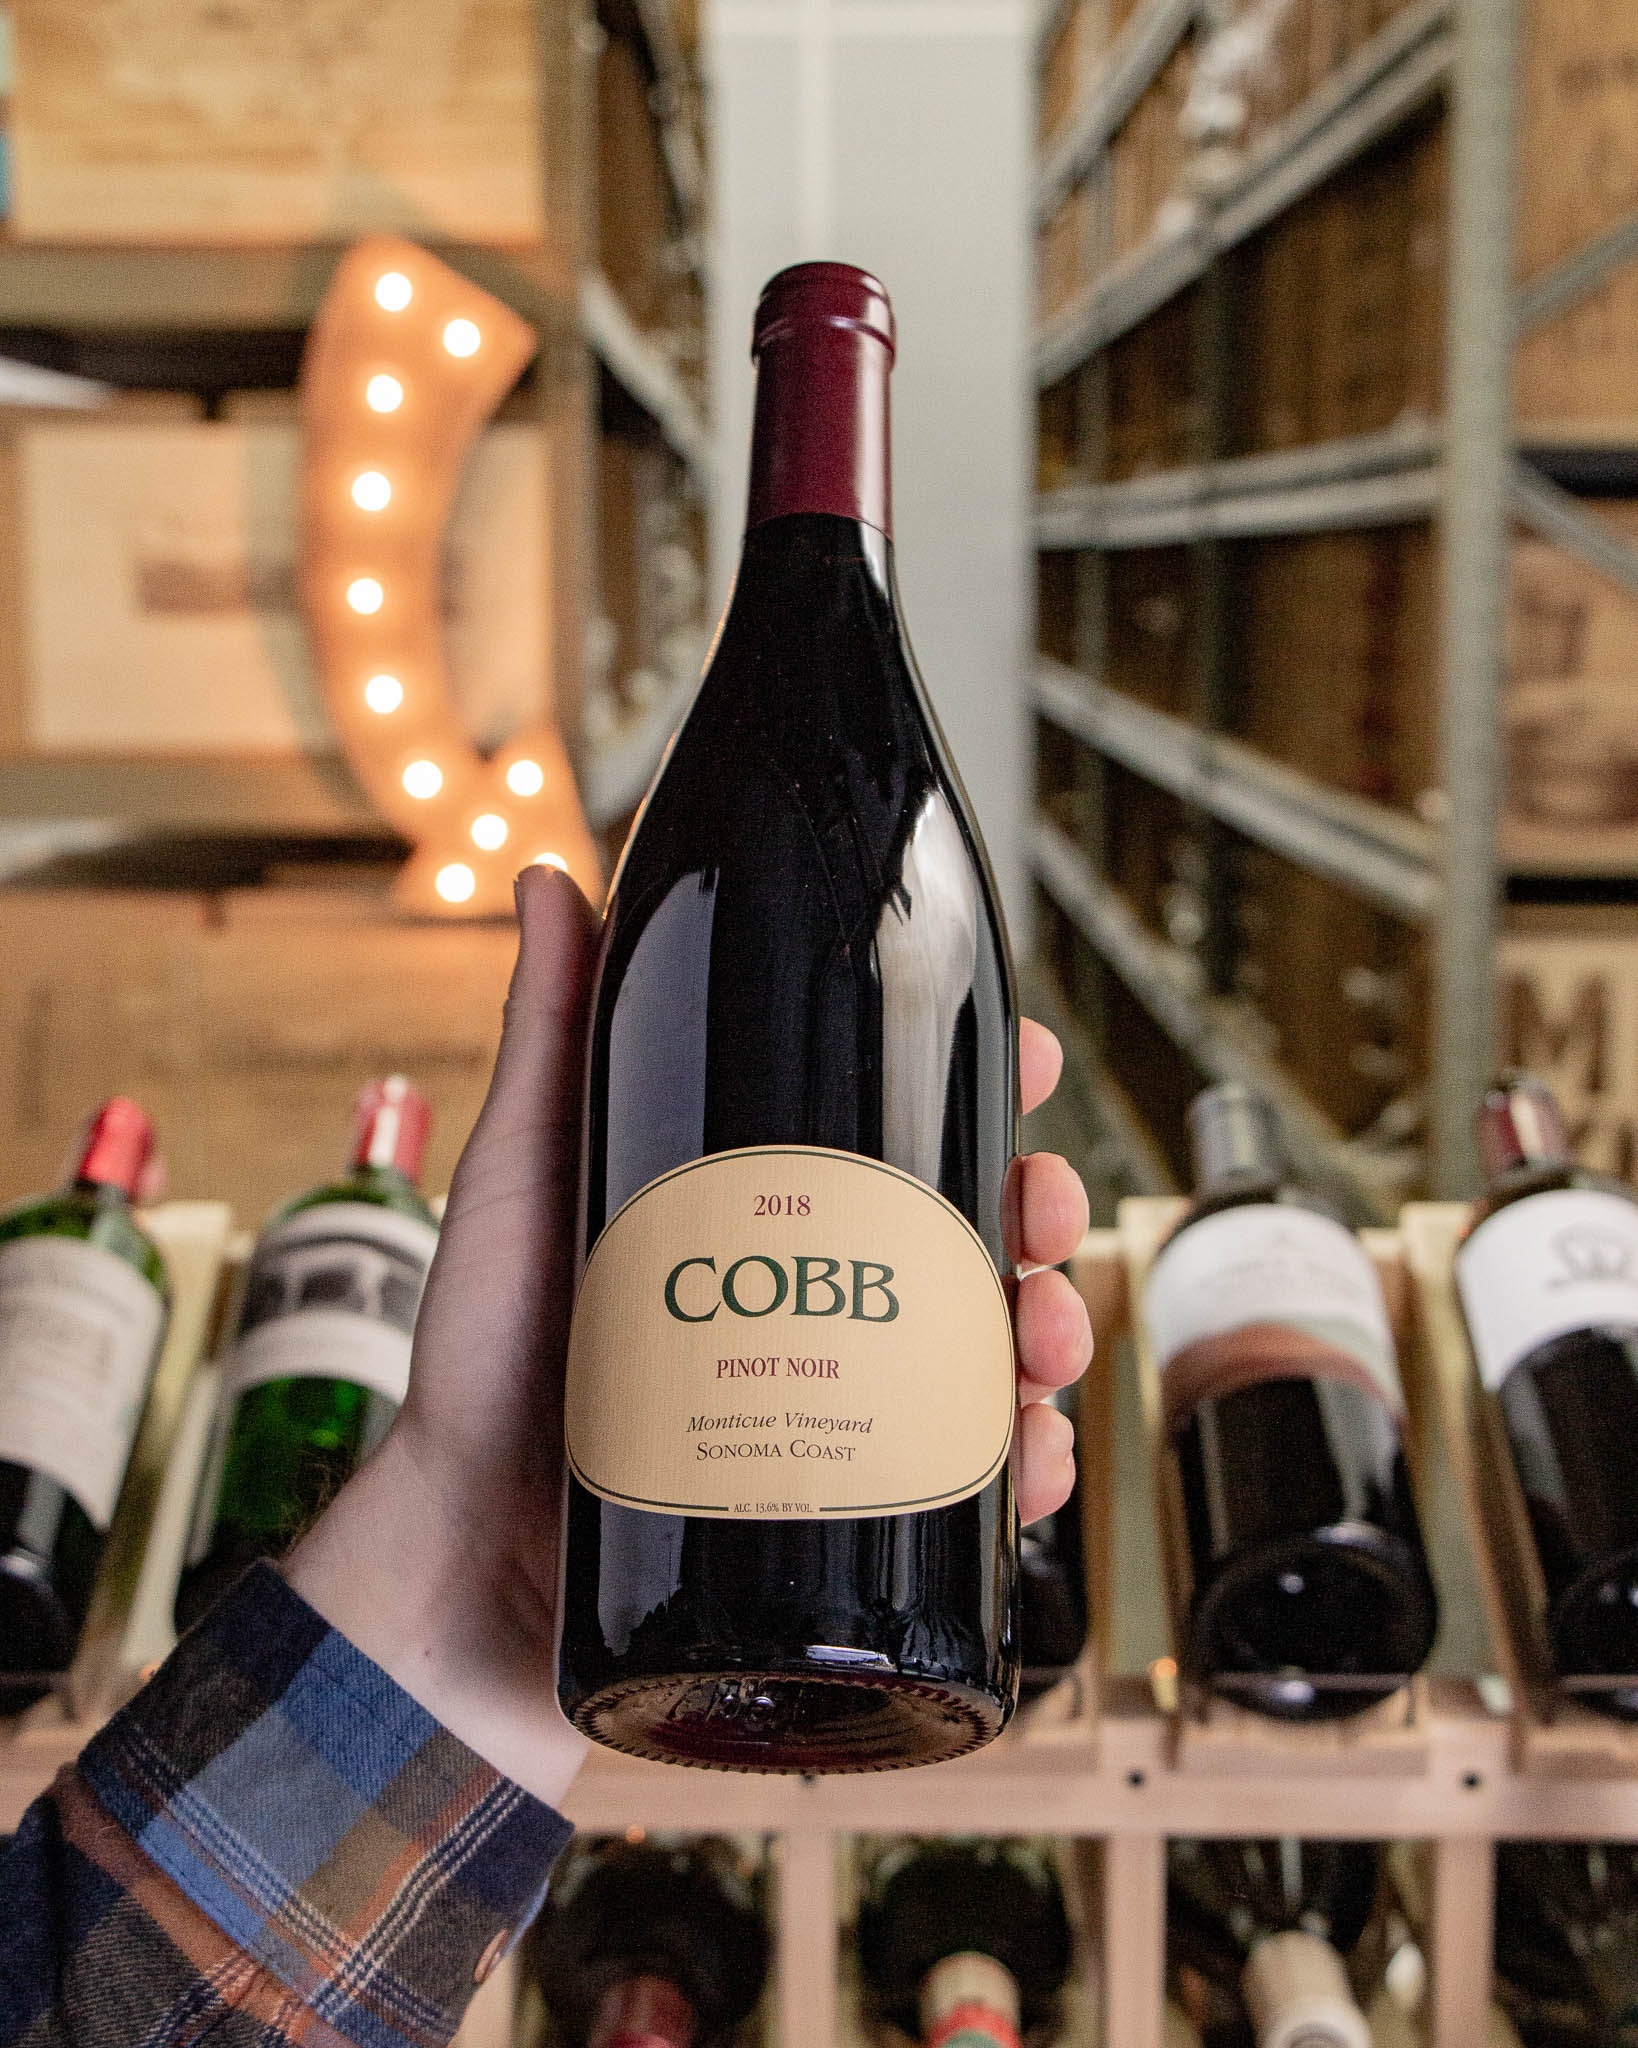 Cobb Pinot Noir Monticue Vineyard Sonoma Coast 2018